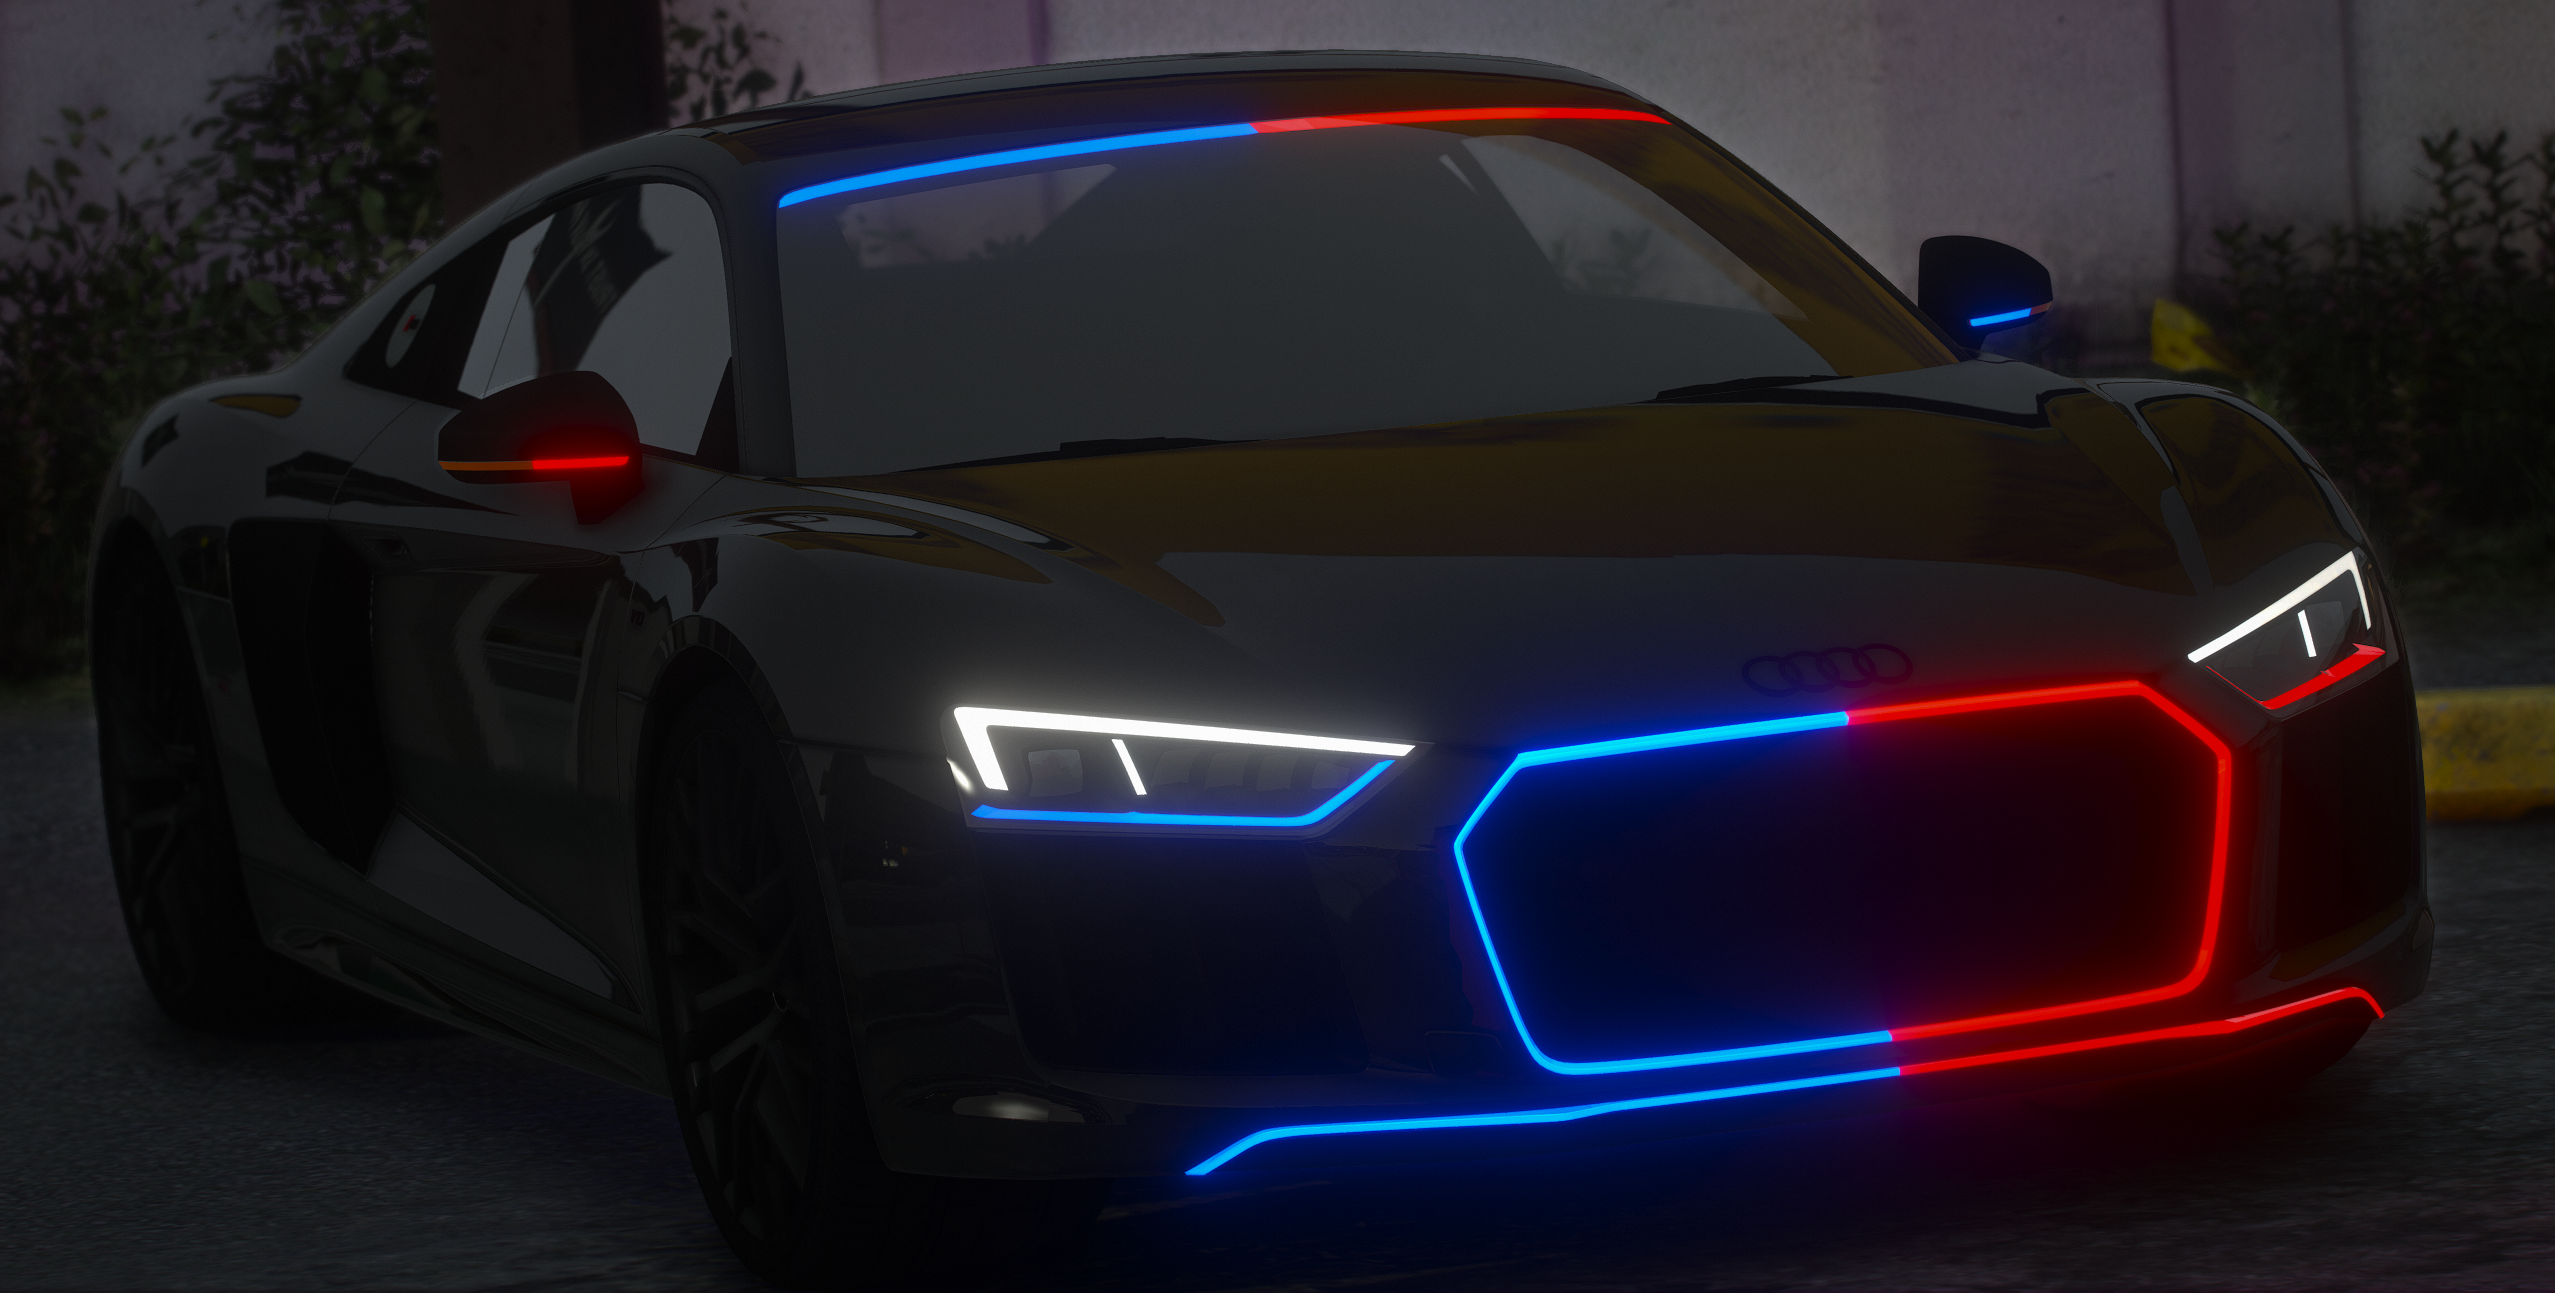 2020 Audi R8 V10 Plus FiveM Police Vehicle